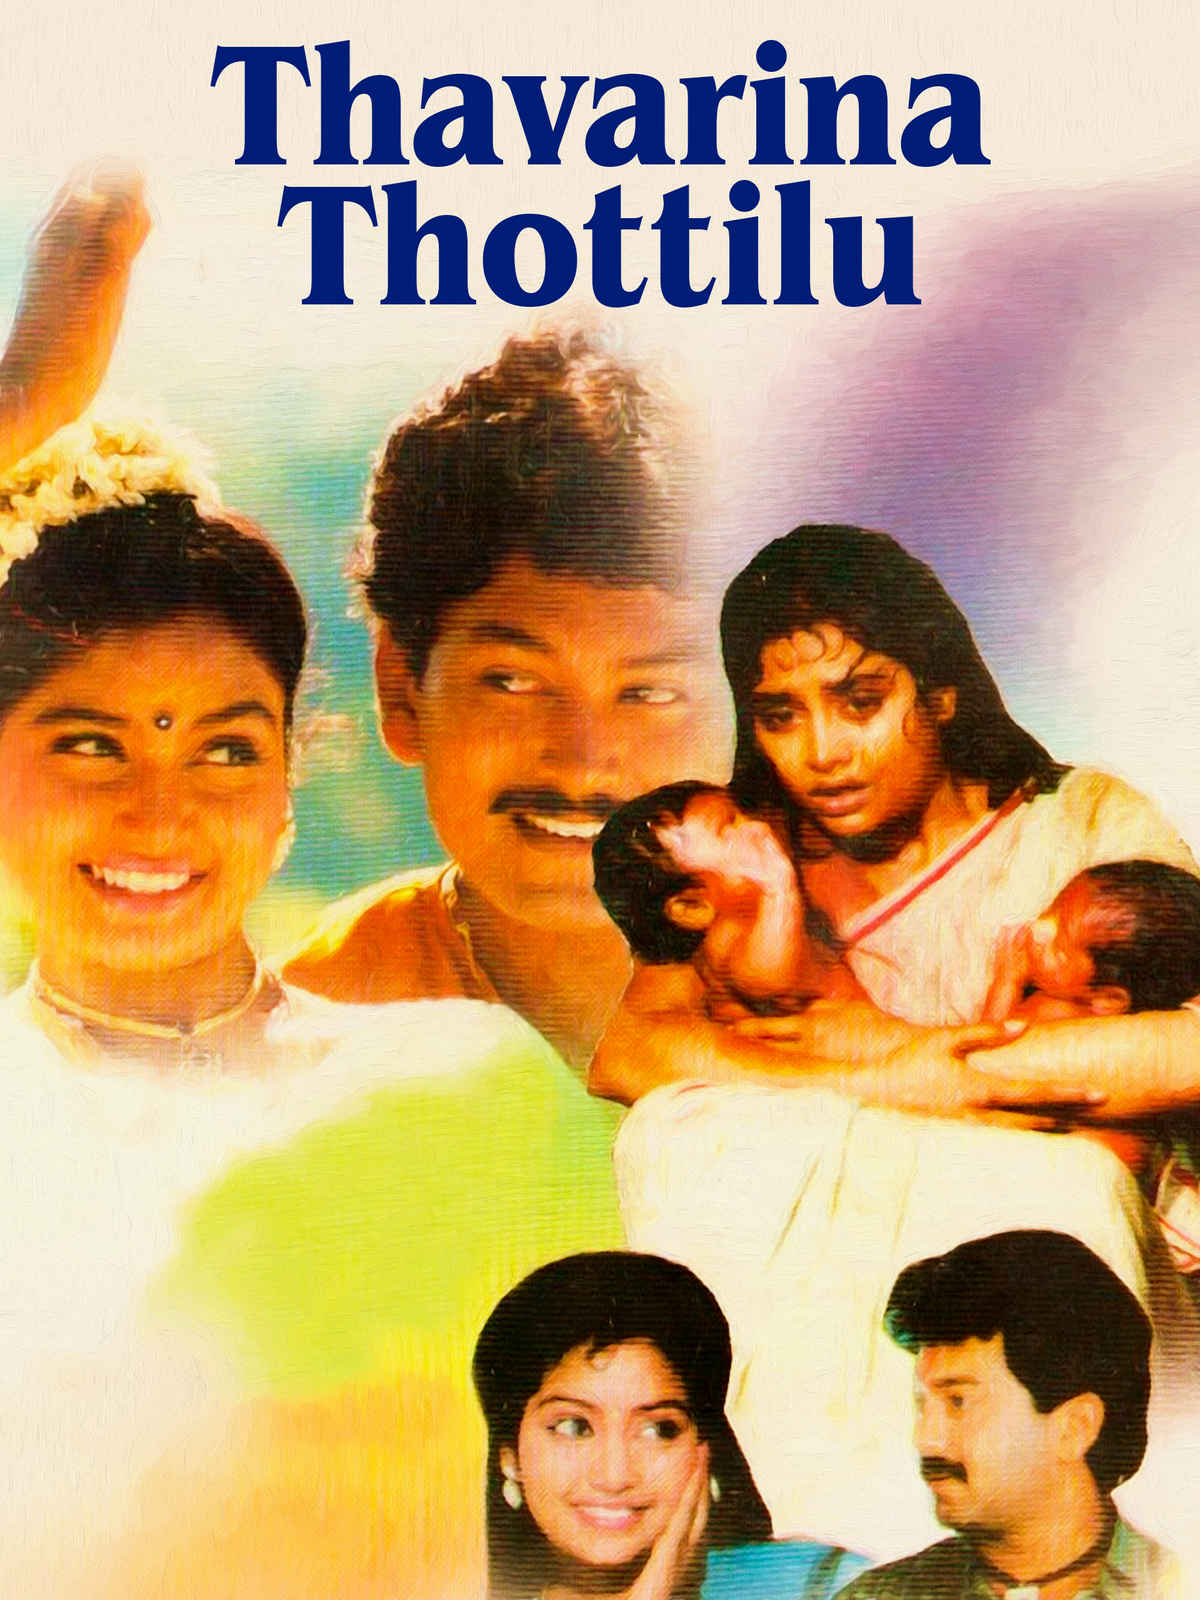 Thavarina Thottilu